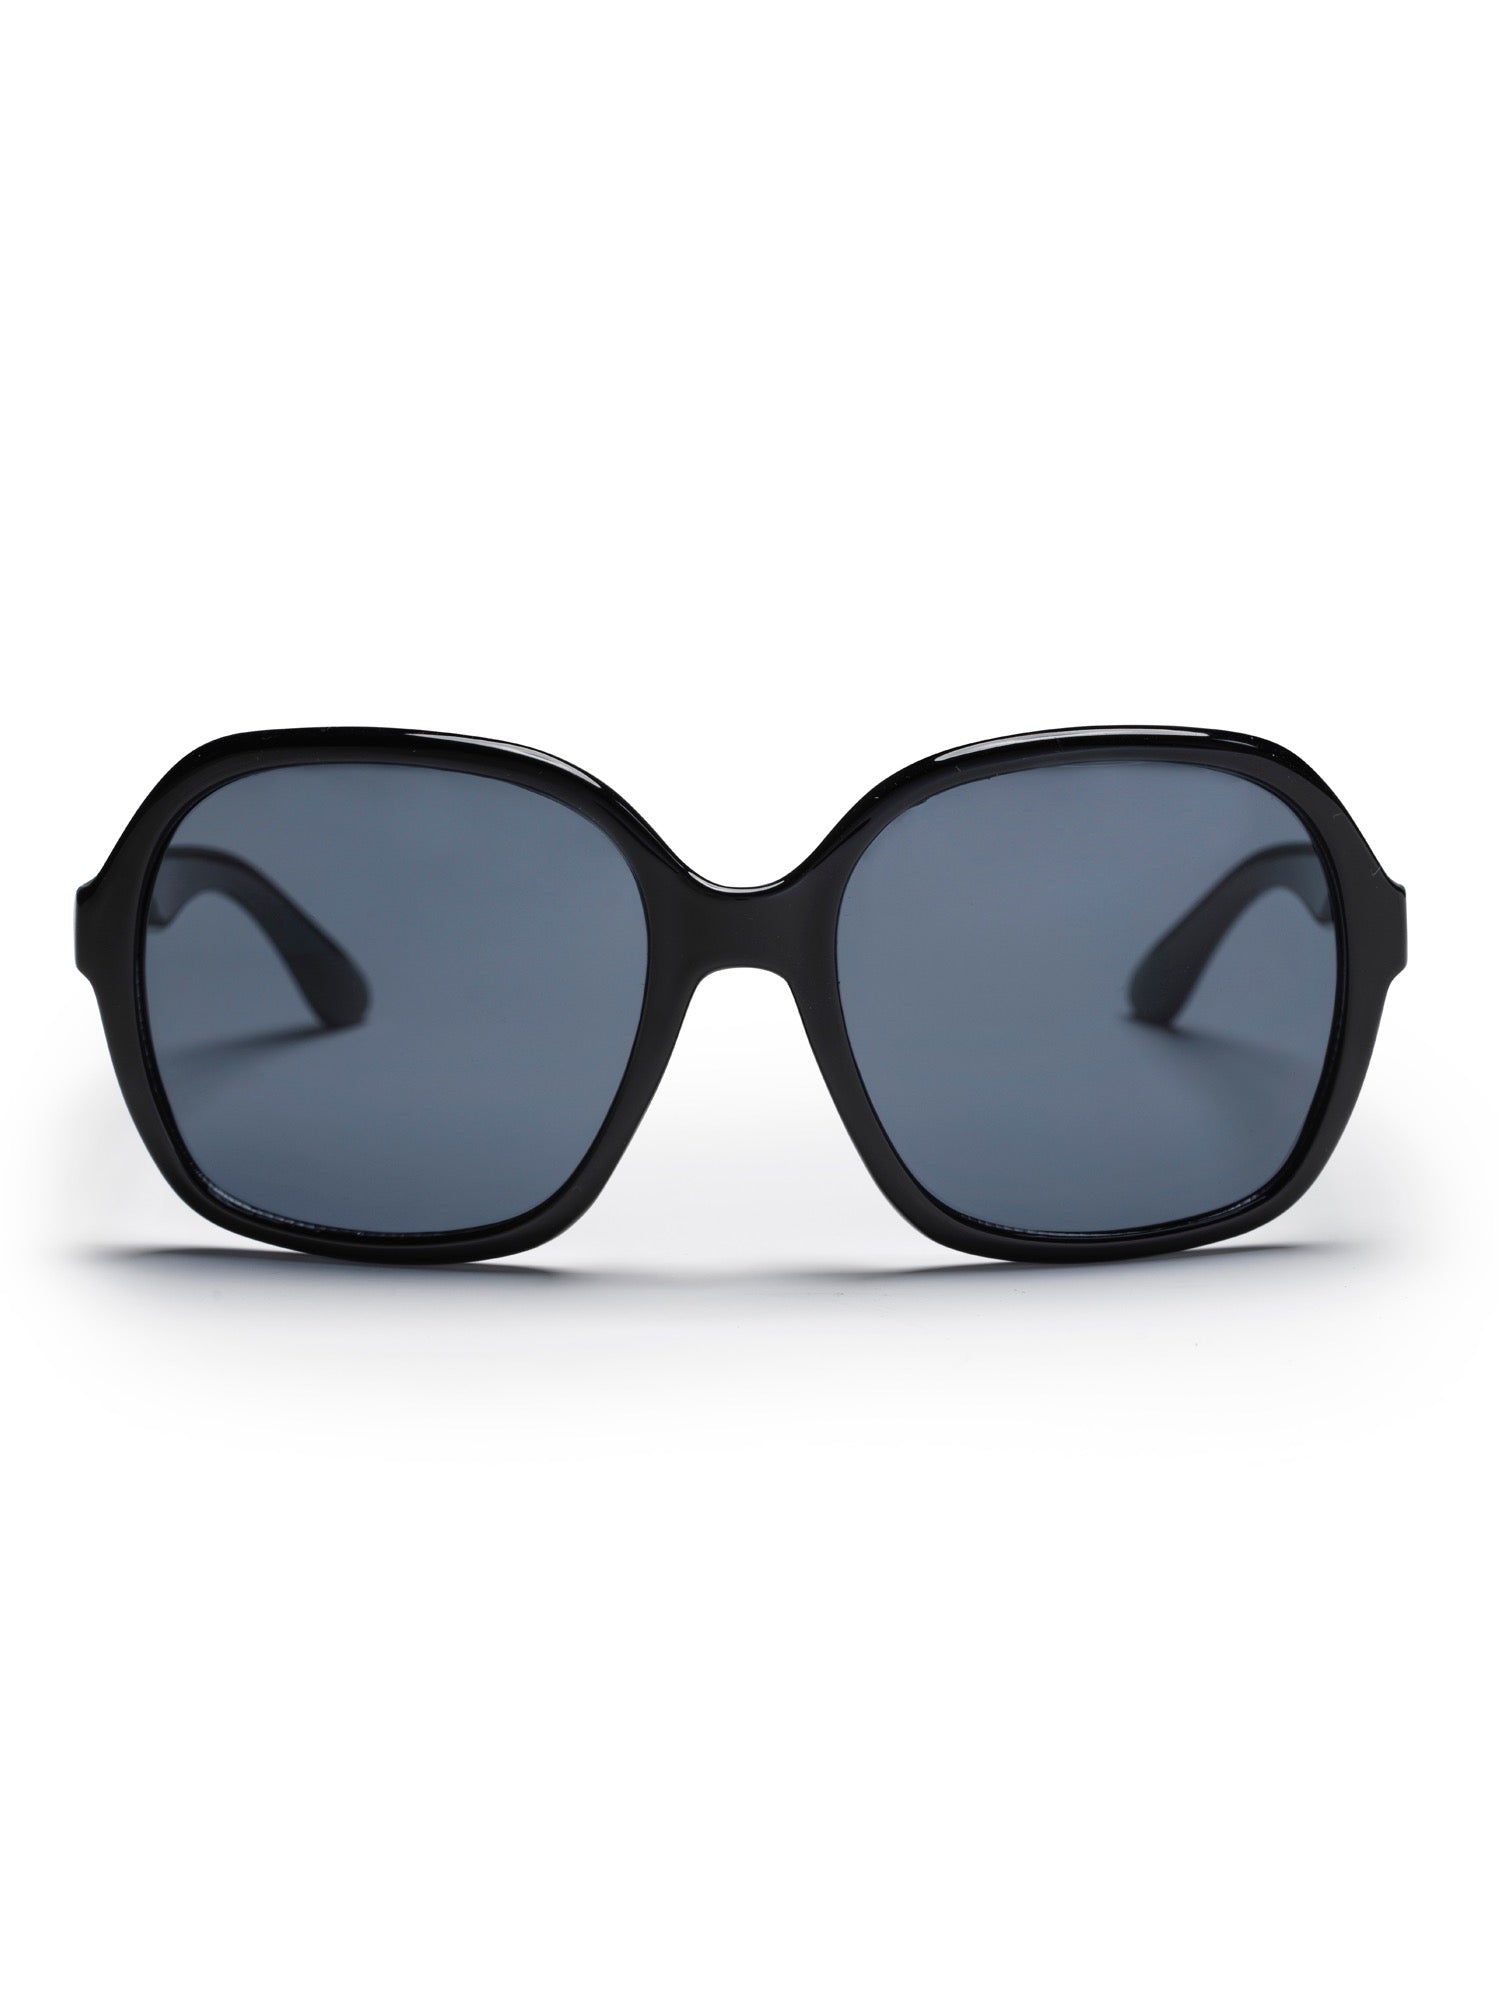 CHPO Gucc Sunglasses - Recycled Plastic Black / Black Sunglasses